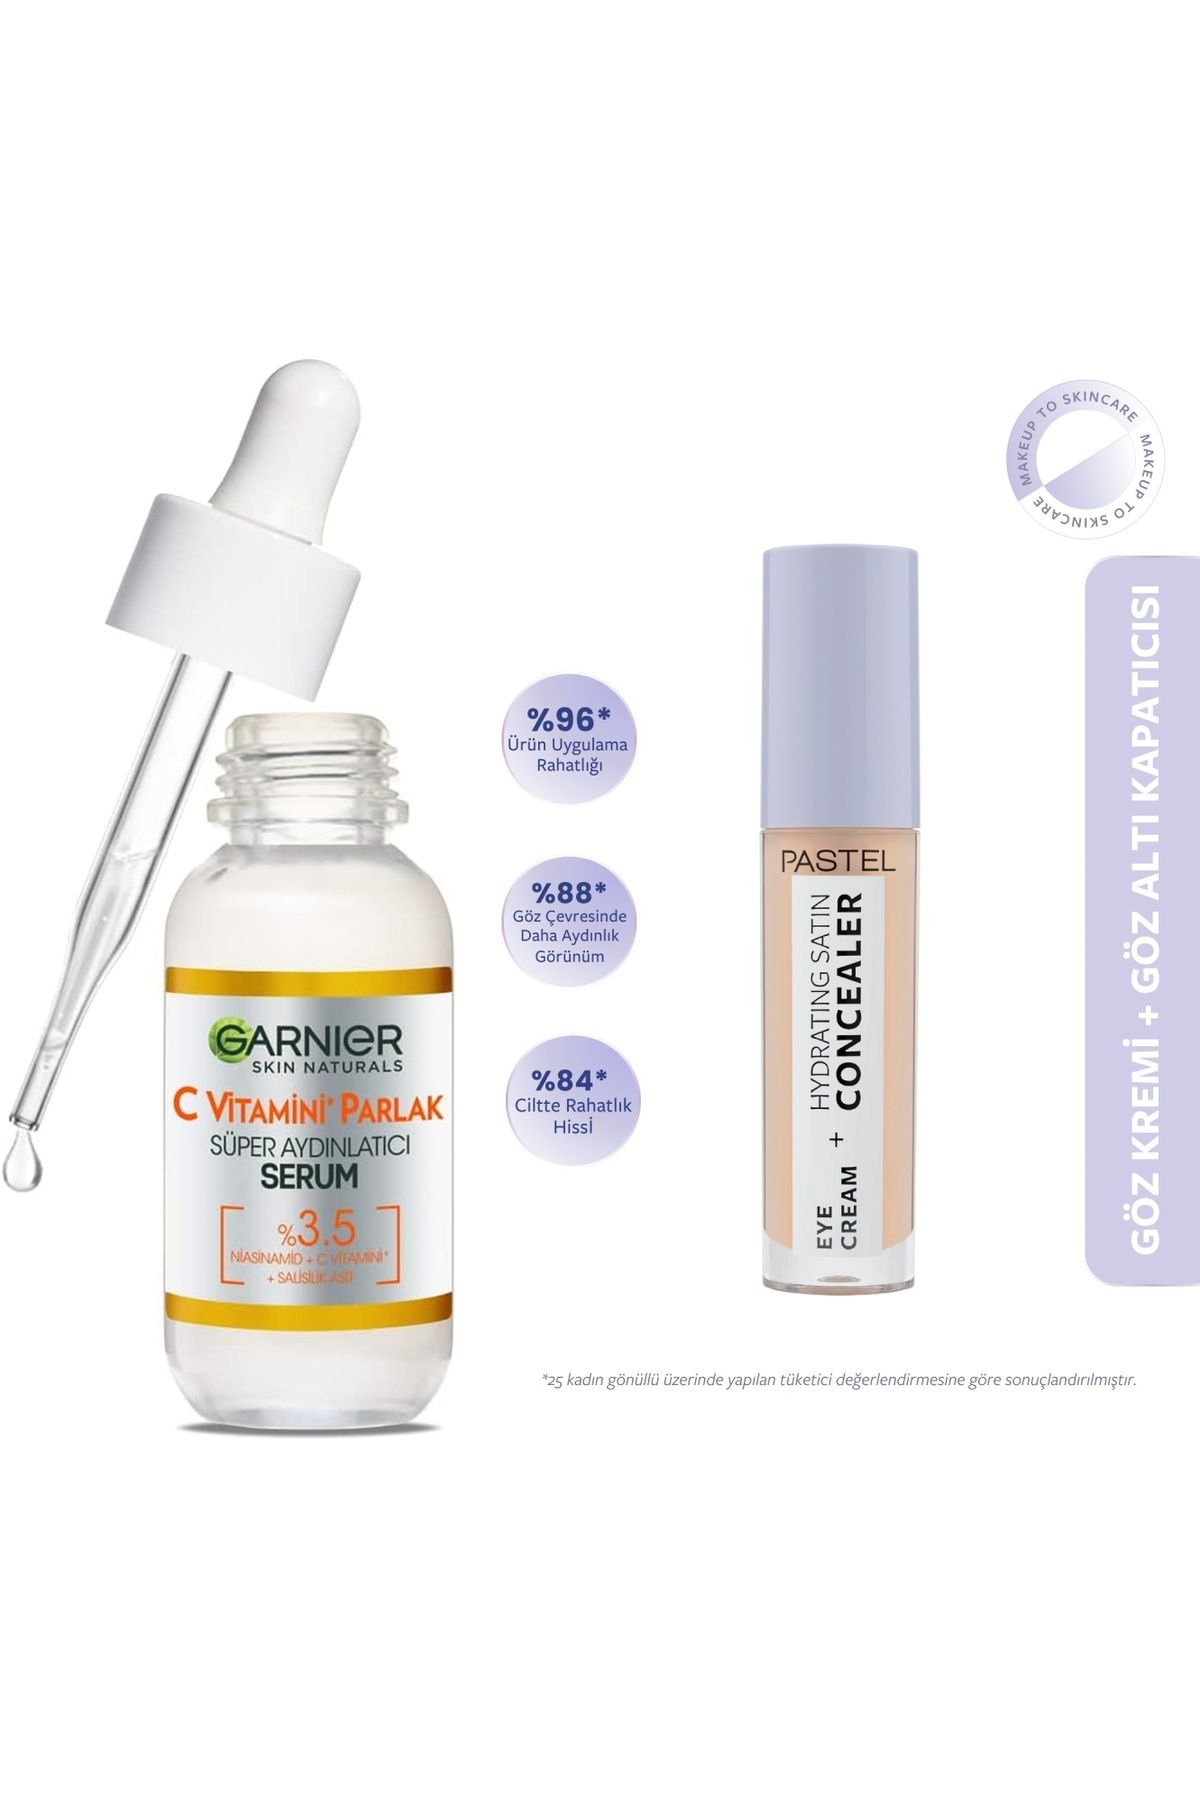 Pastel Garnier C Vitamini Parlak Süper Aydınlatıcı Serum 30 ml + Pastel Eye Cream Hydrating Satin Concealer